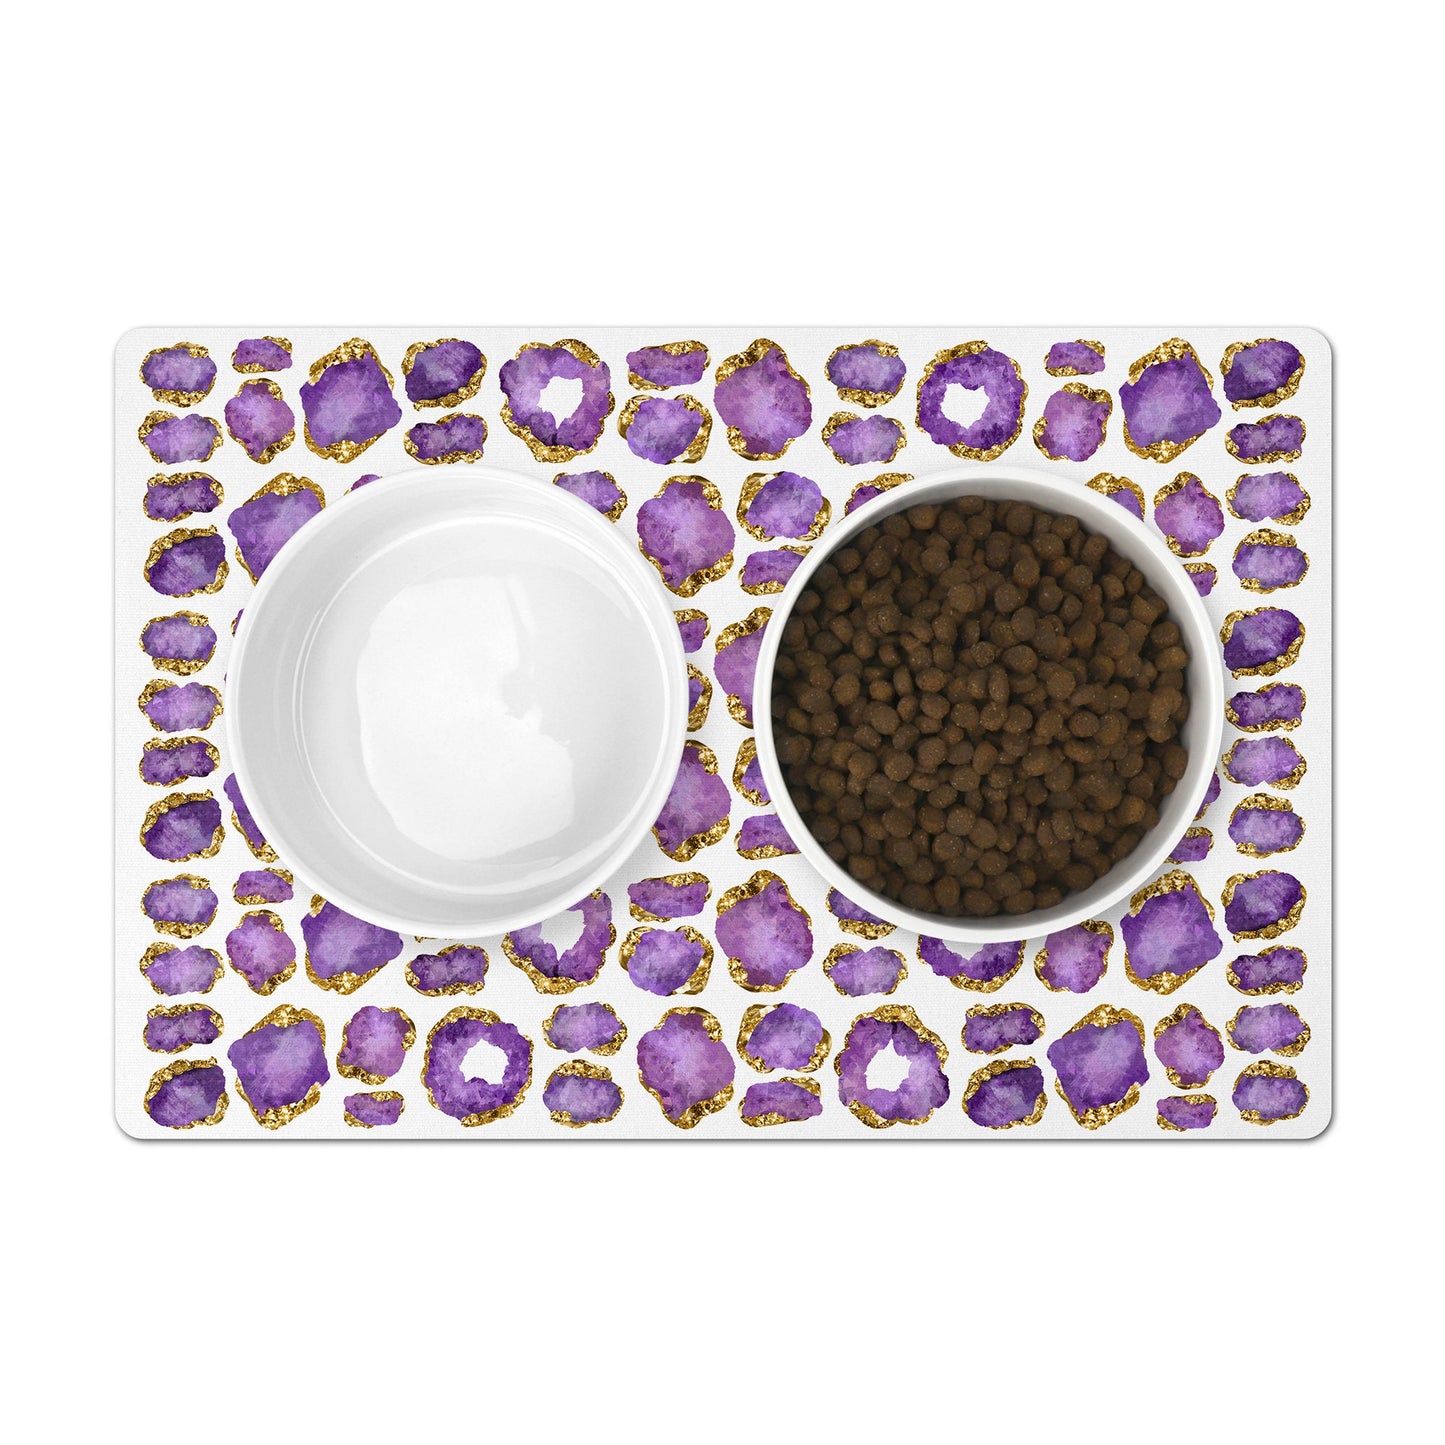 Mat for pet food bowls has purple amethyst jewel print.